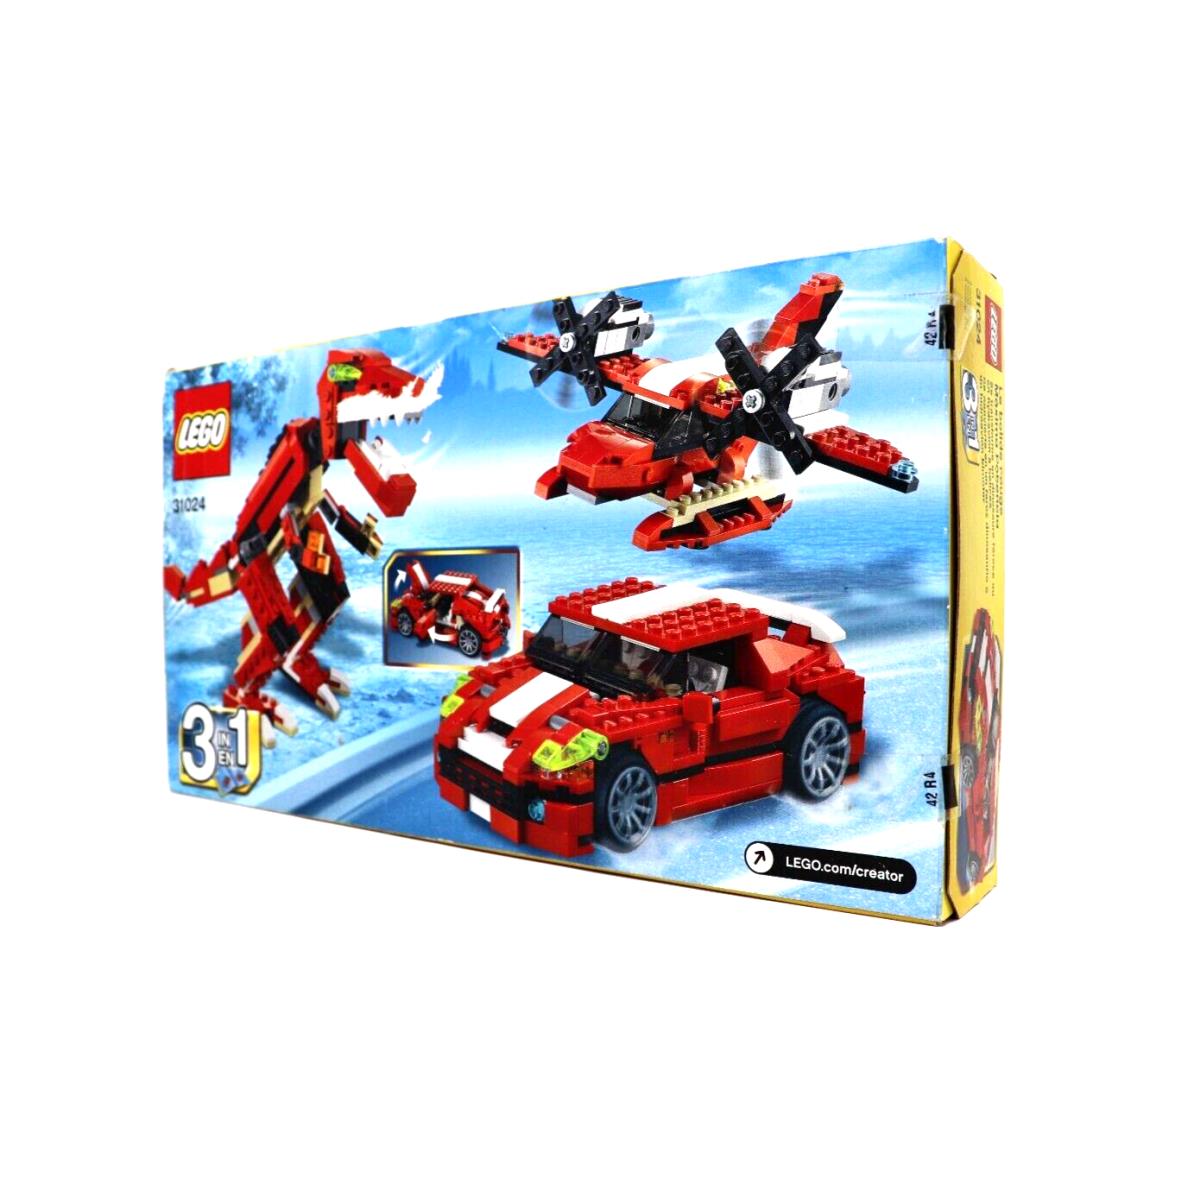 Lego Creator 31024 Roaring Power 374 Pcs 3 in 1 Set 2014